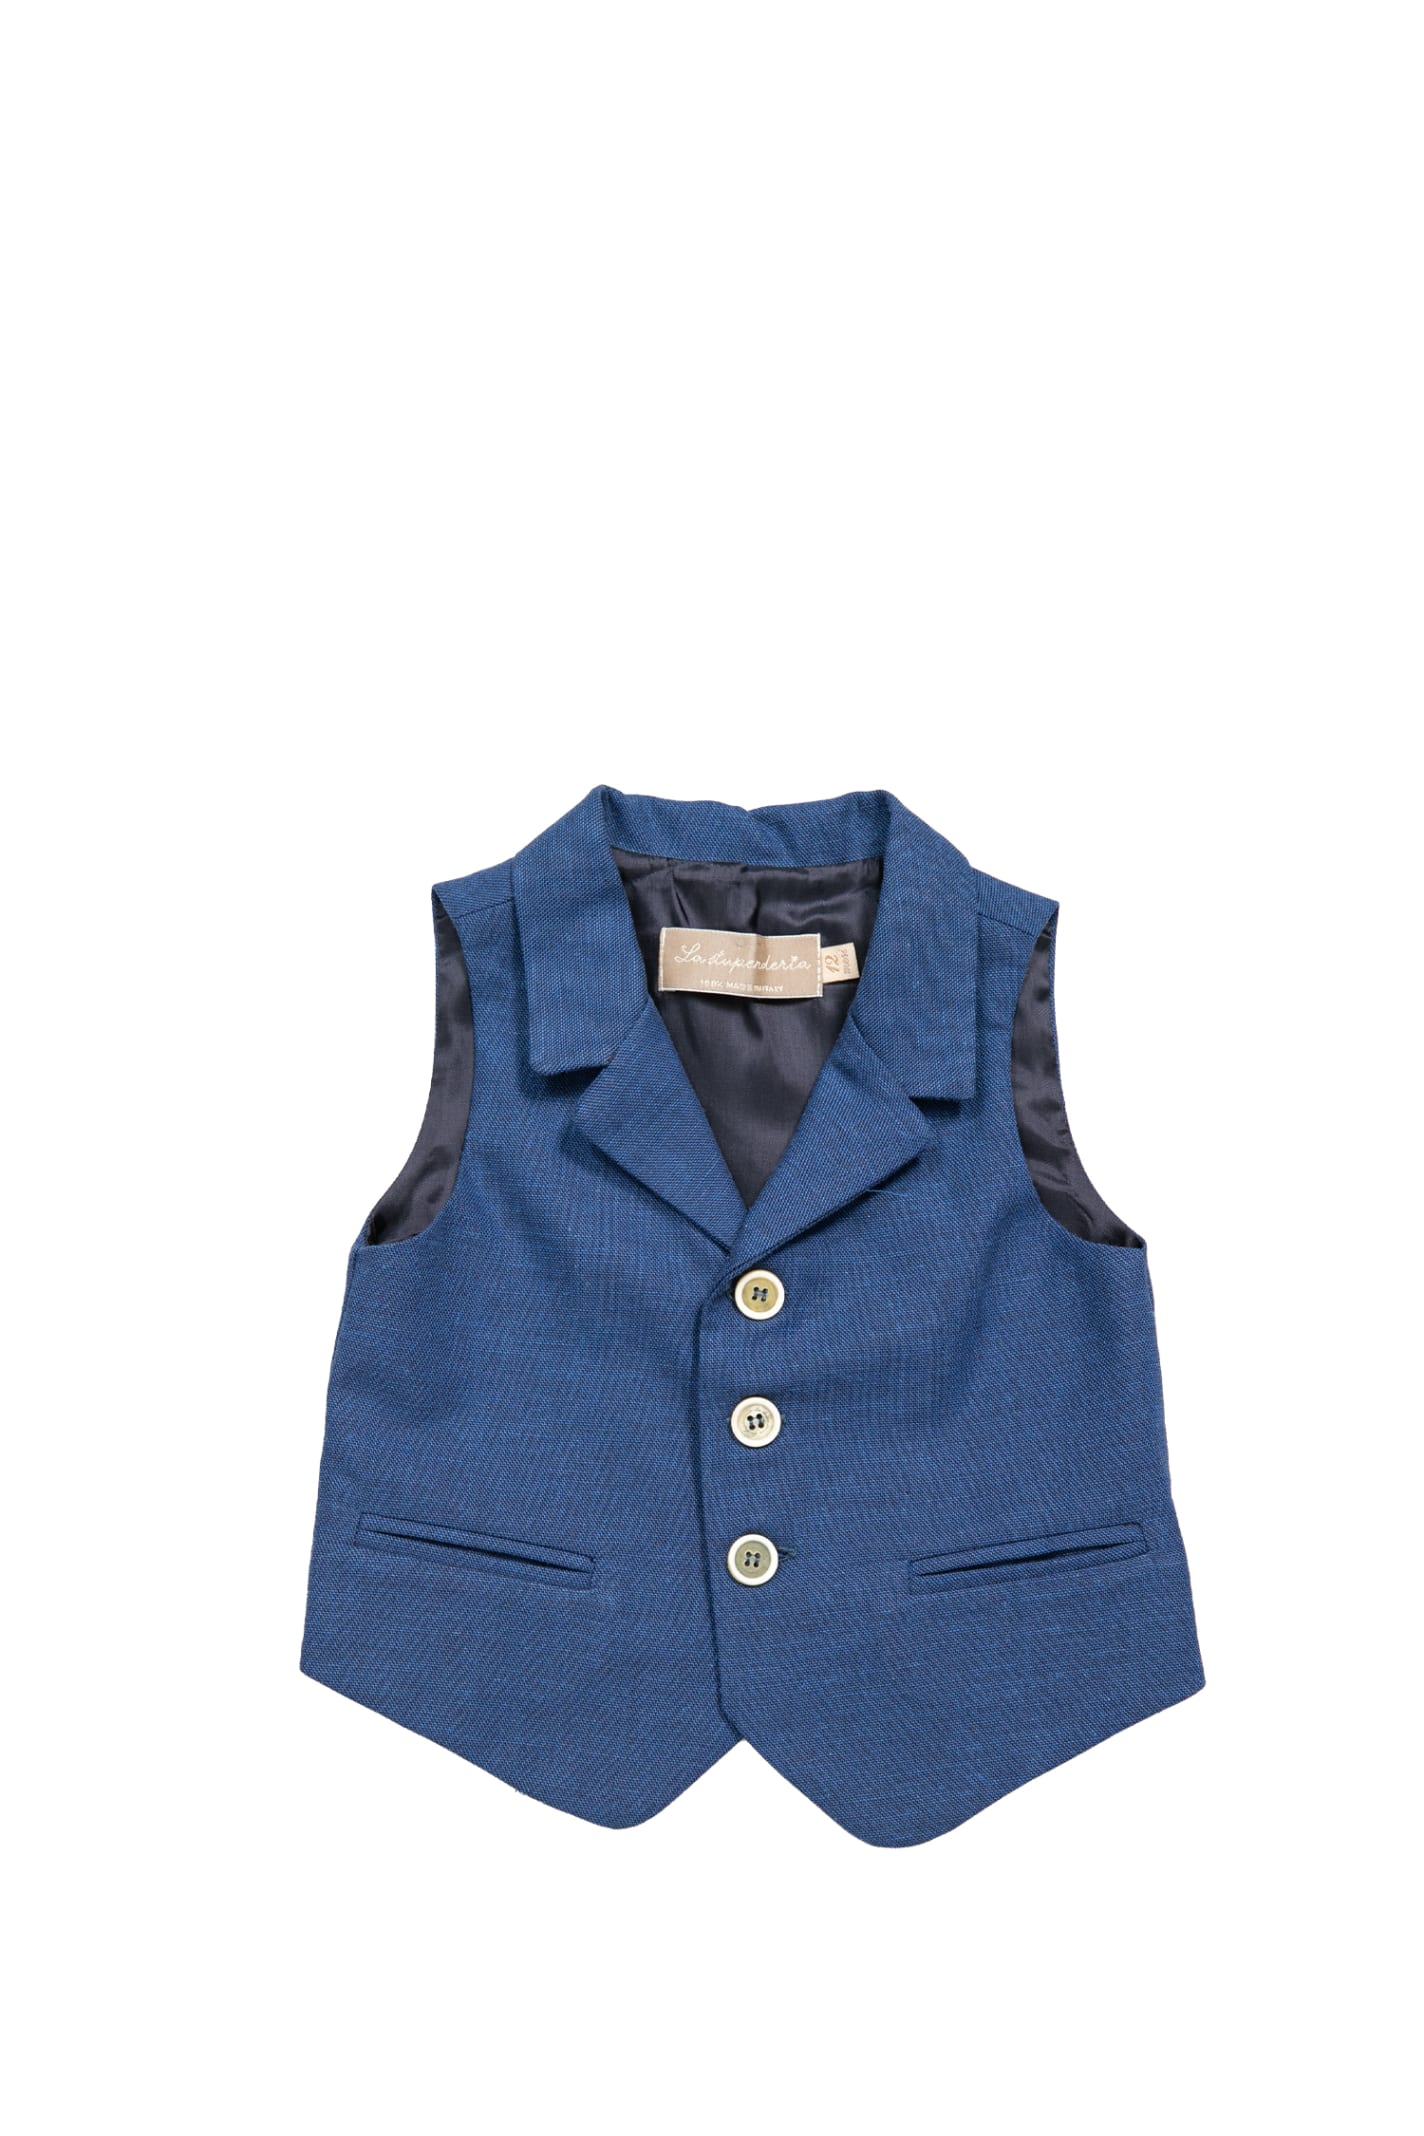 La Stupenderia Kids' Cotton And Linen Vest